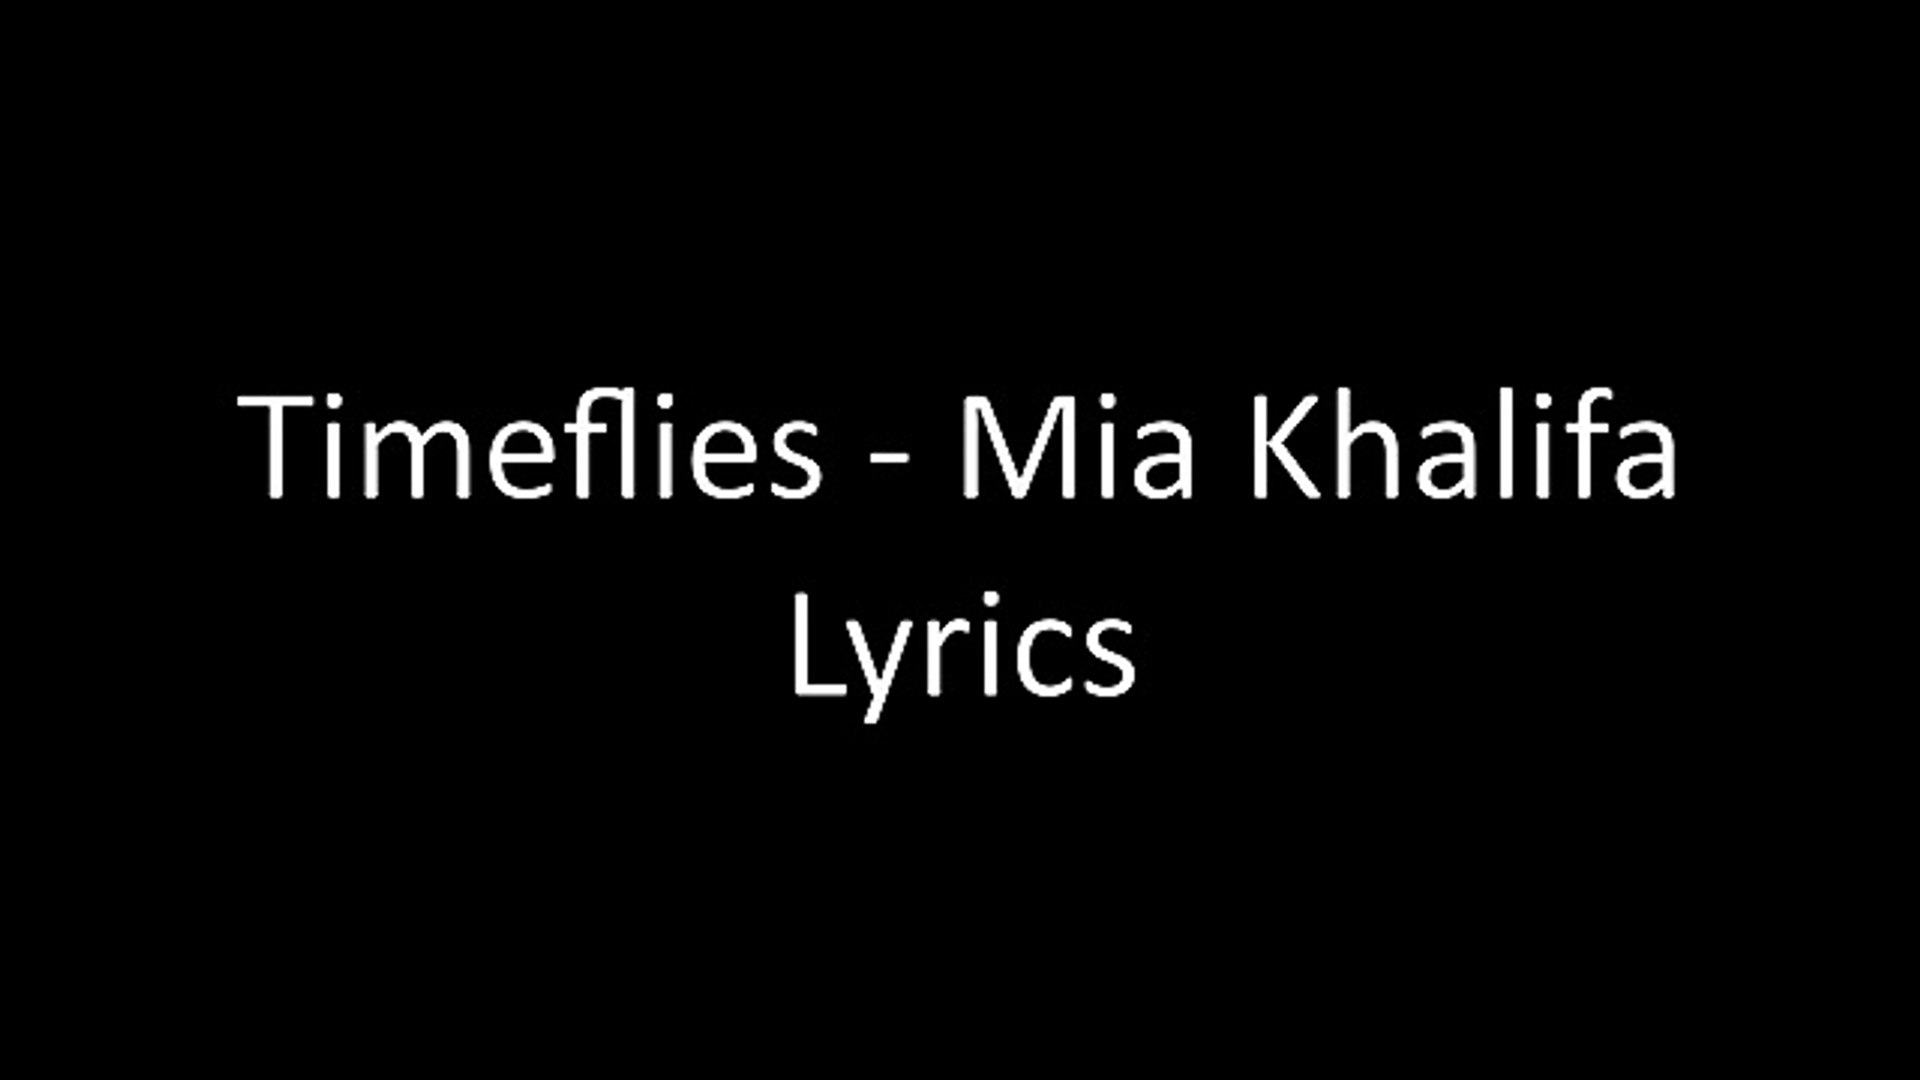 Best of Mia khalifa song timeflies